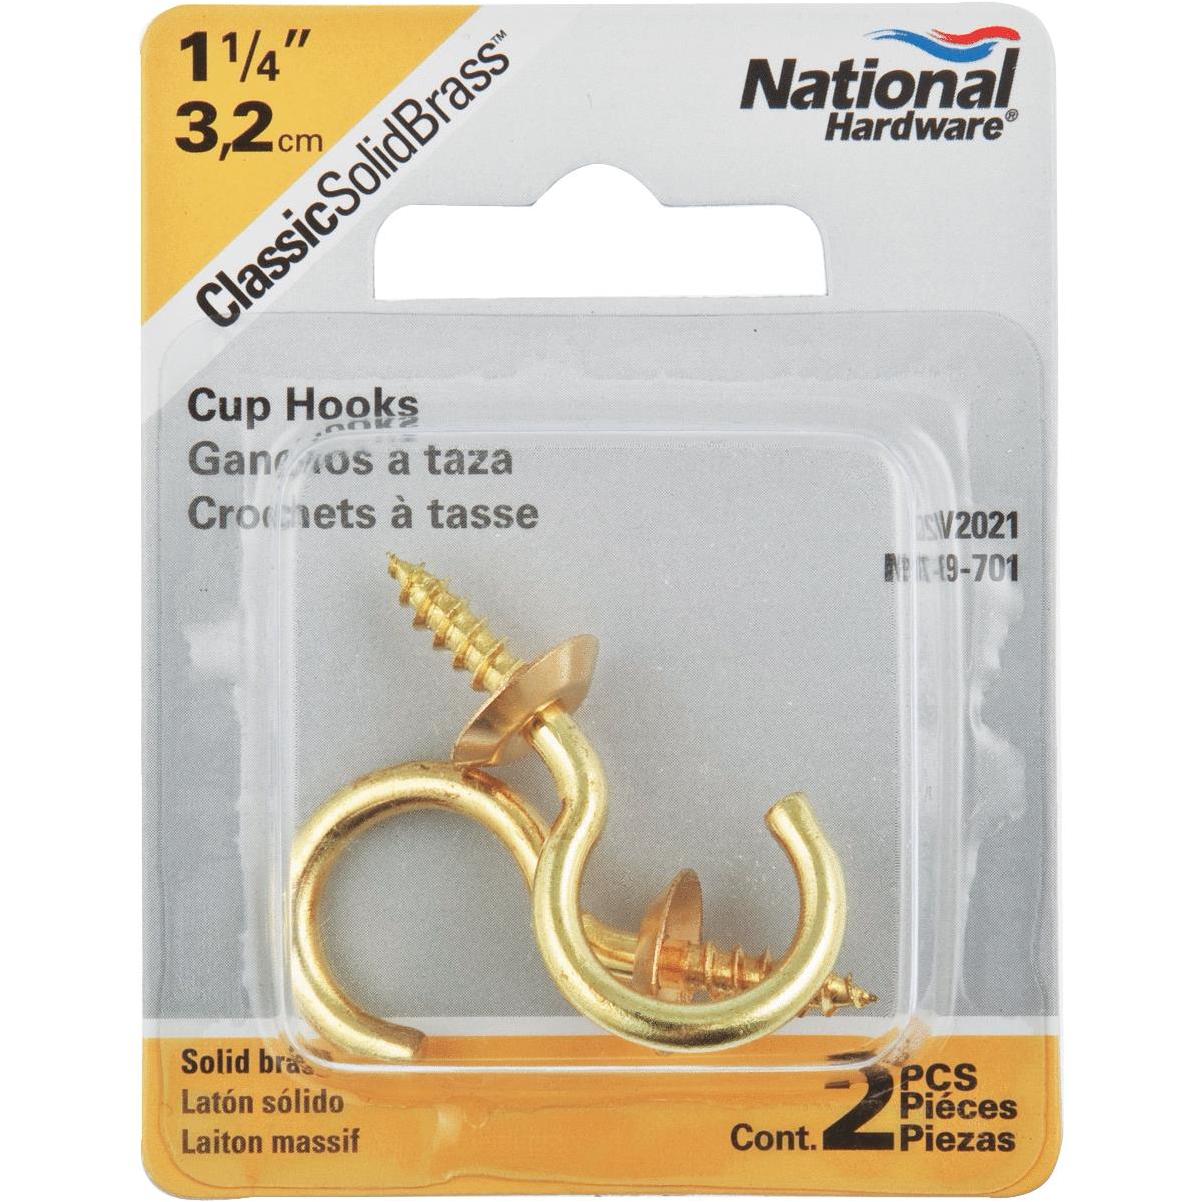 National VS2021 Series 3/4 In. Screw in Cup Hook (50 Count)